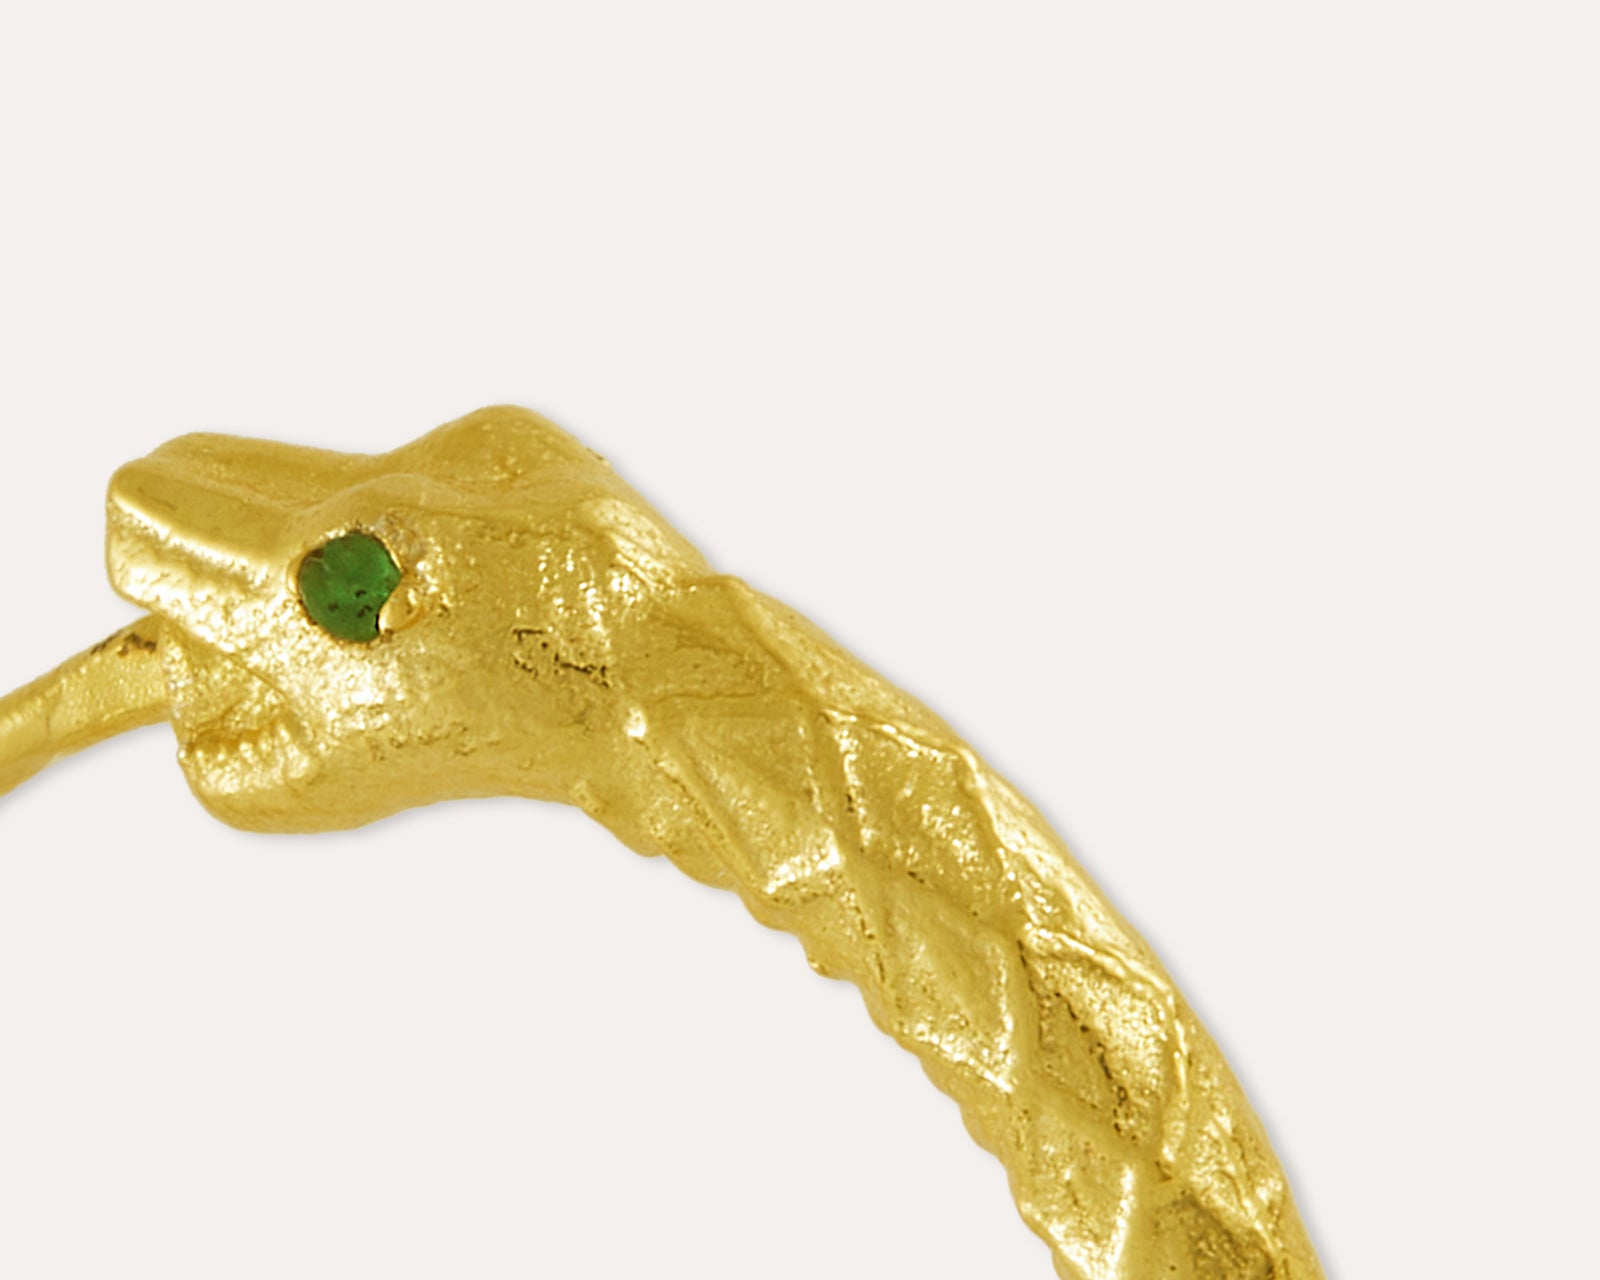 Rebirth Emerald Snake Hoop Earrings | Sustainable Jewellery by Ottoman Hands